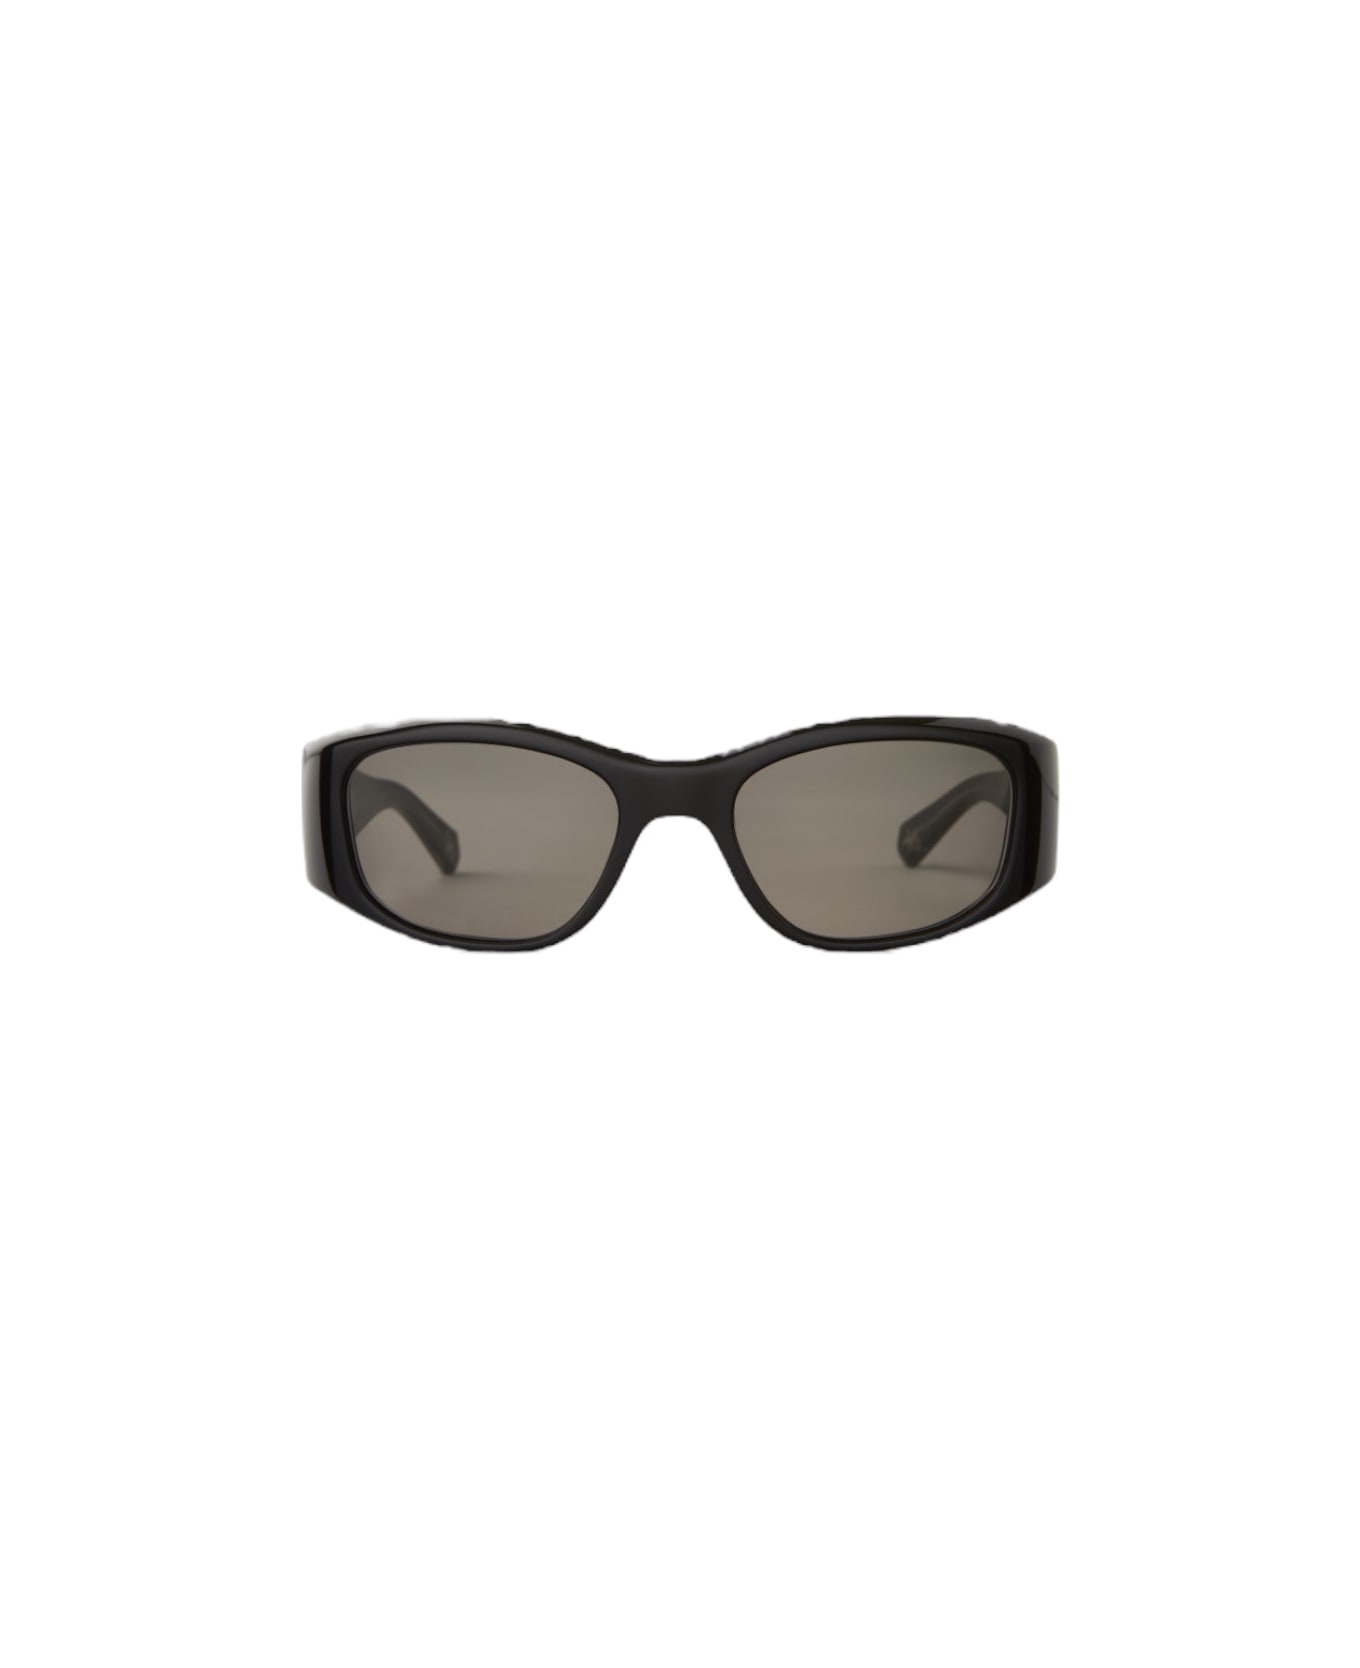 Mr. Leight Aloha - Black Sunglasses サングラス